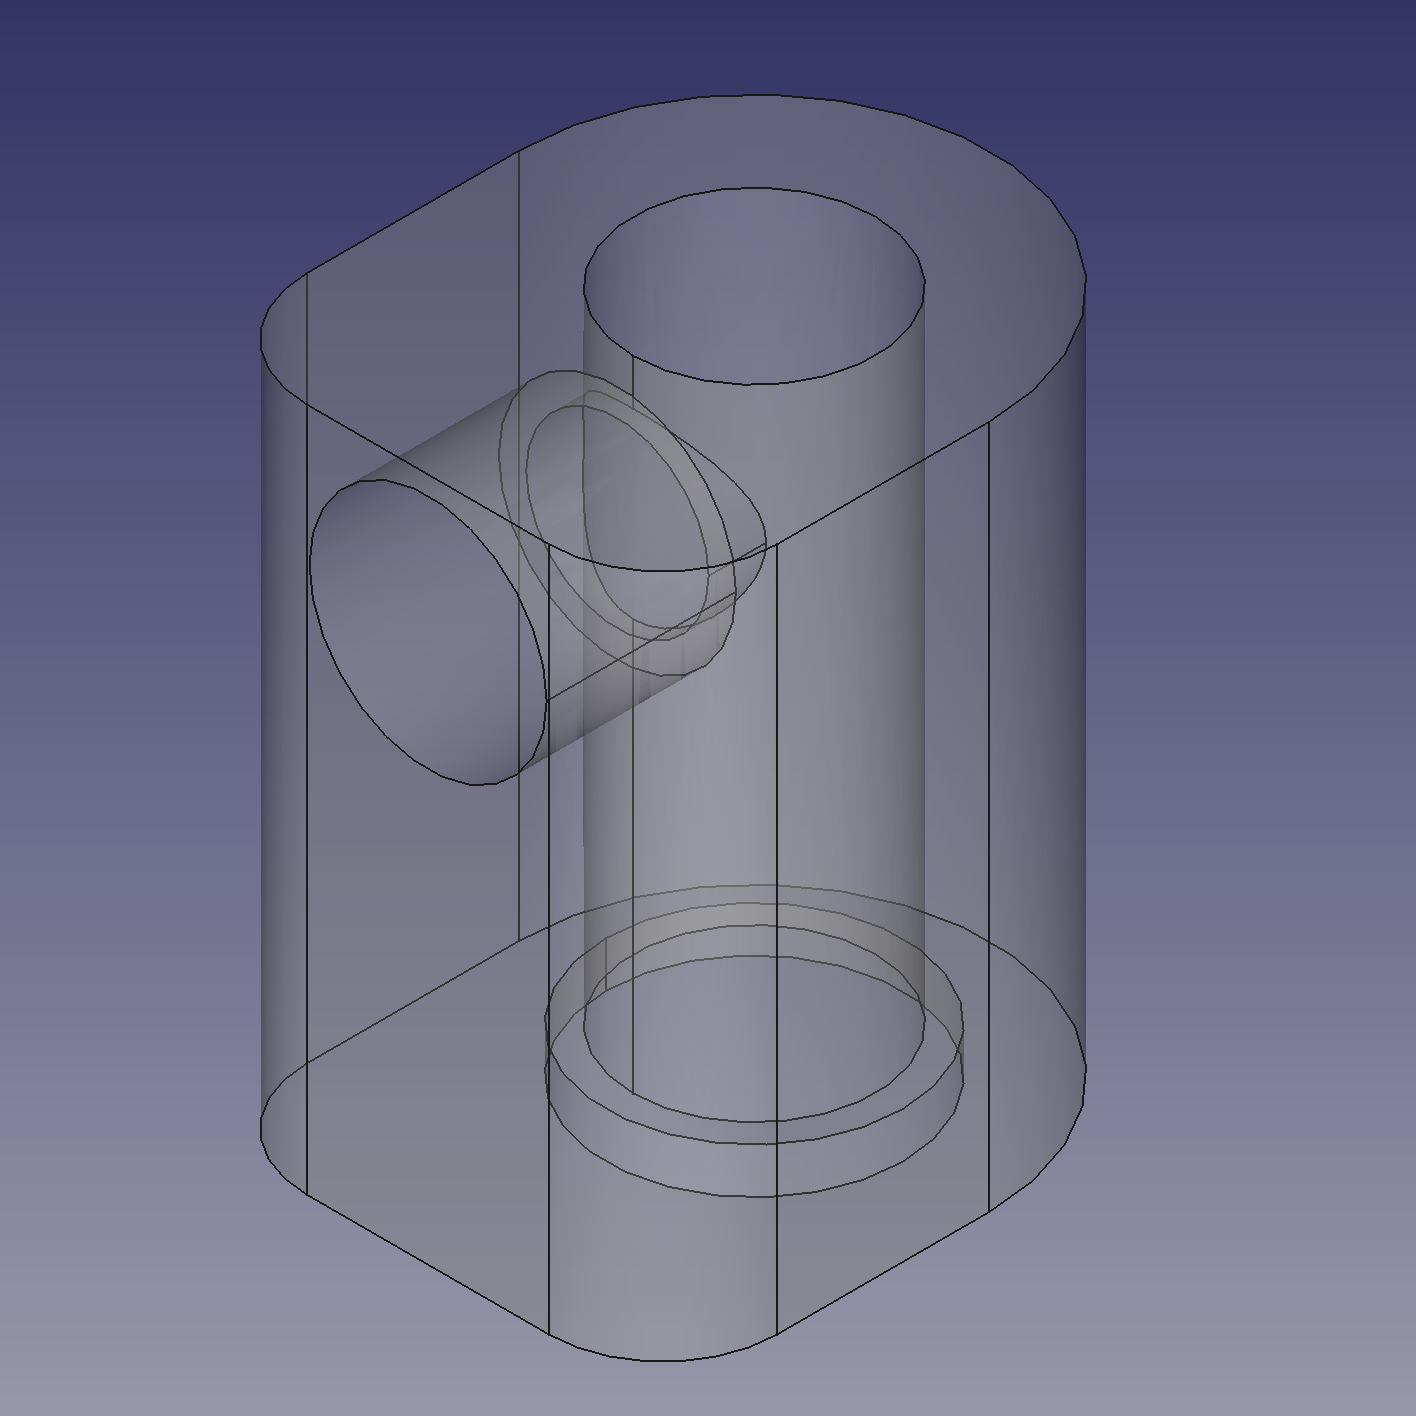 CAD Drawing of a Circular LED Photoresistor Shroud